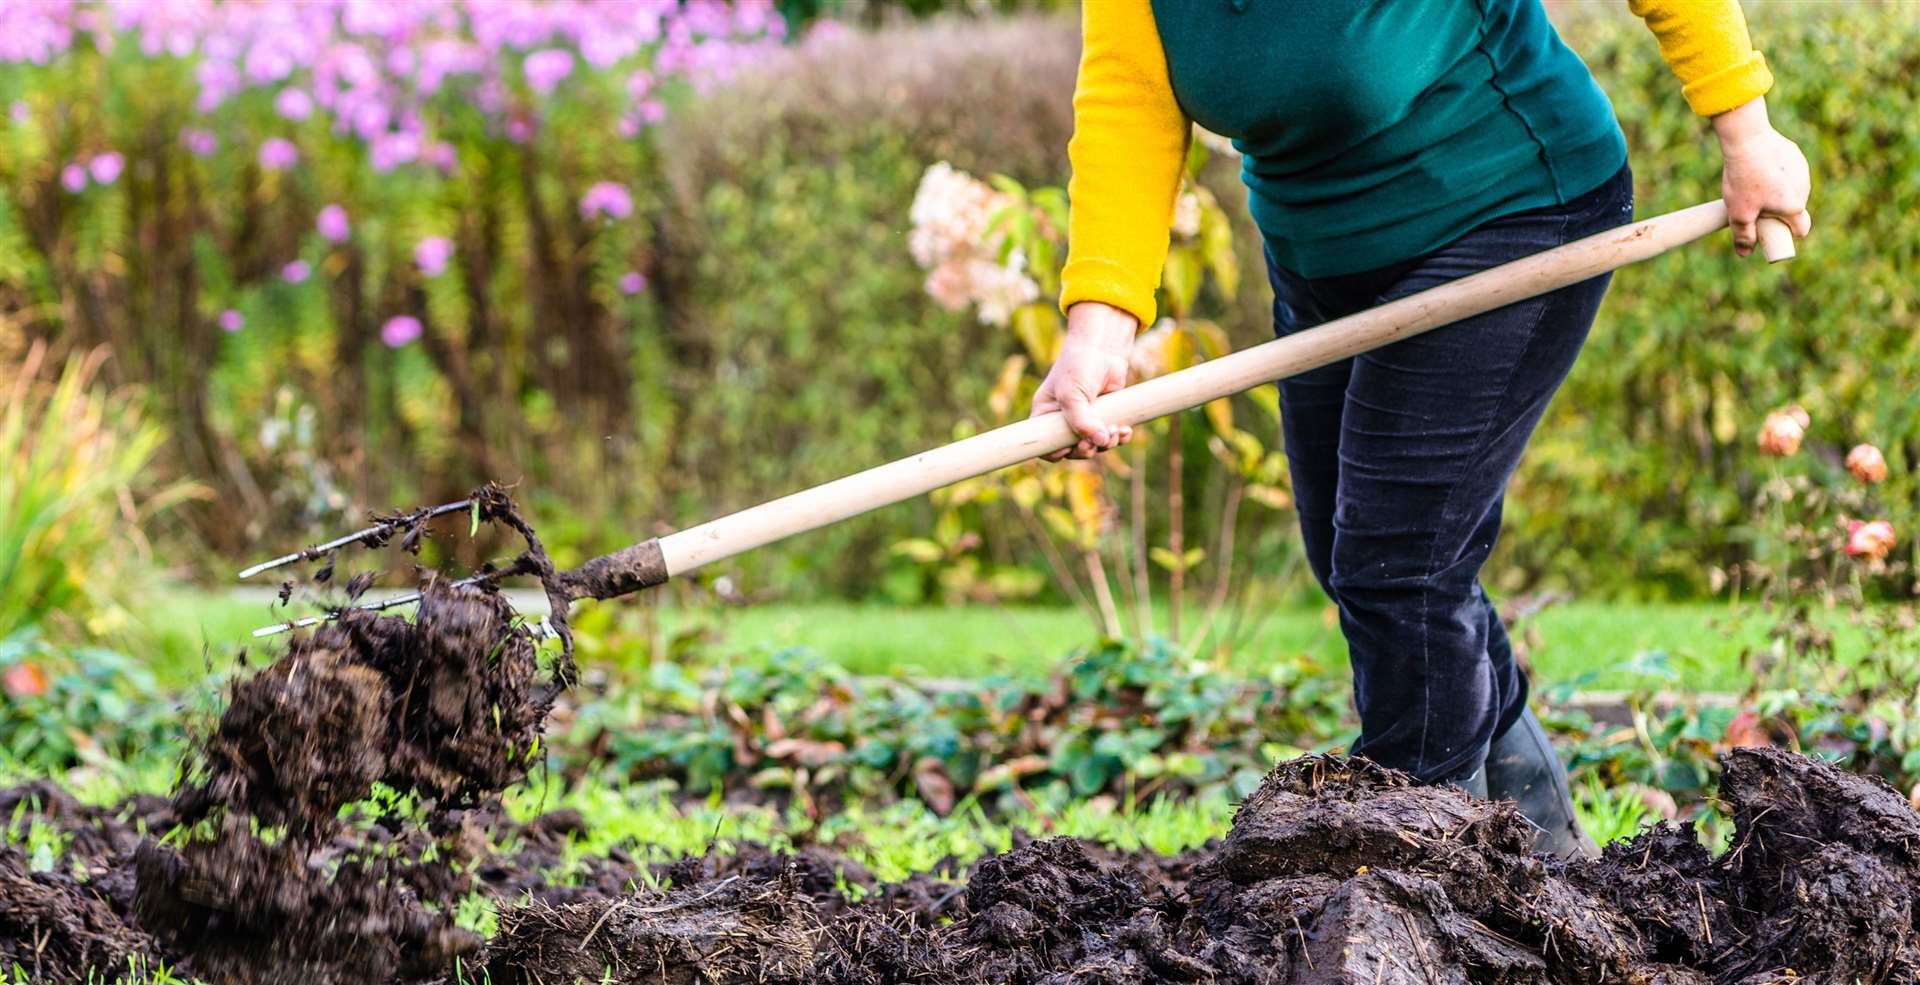 Adding organic fertilizer can help create an aerated area.